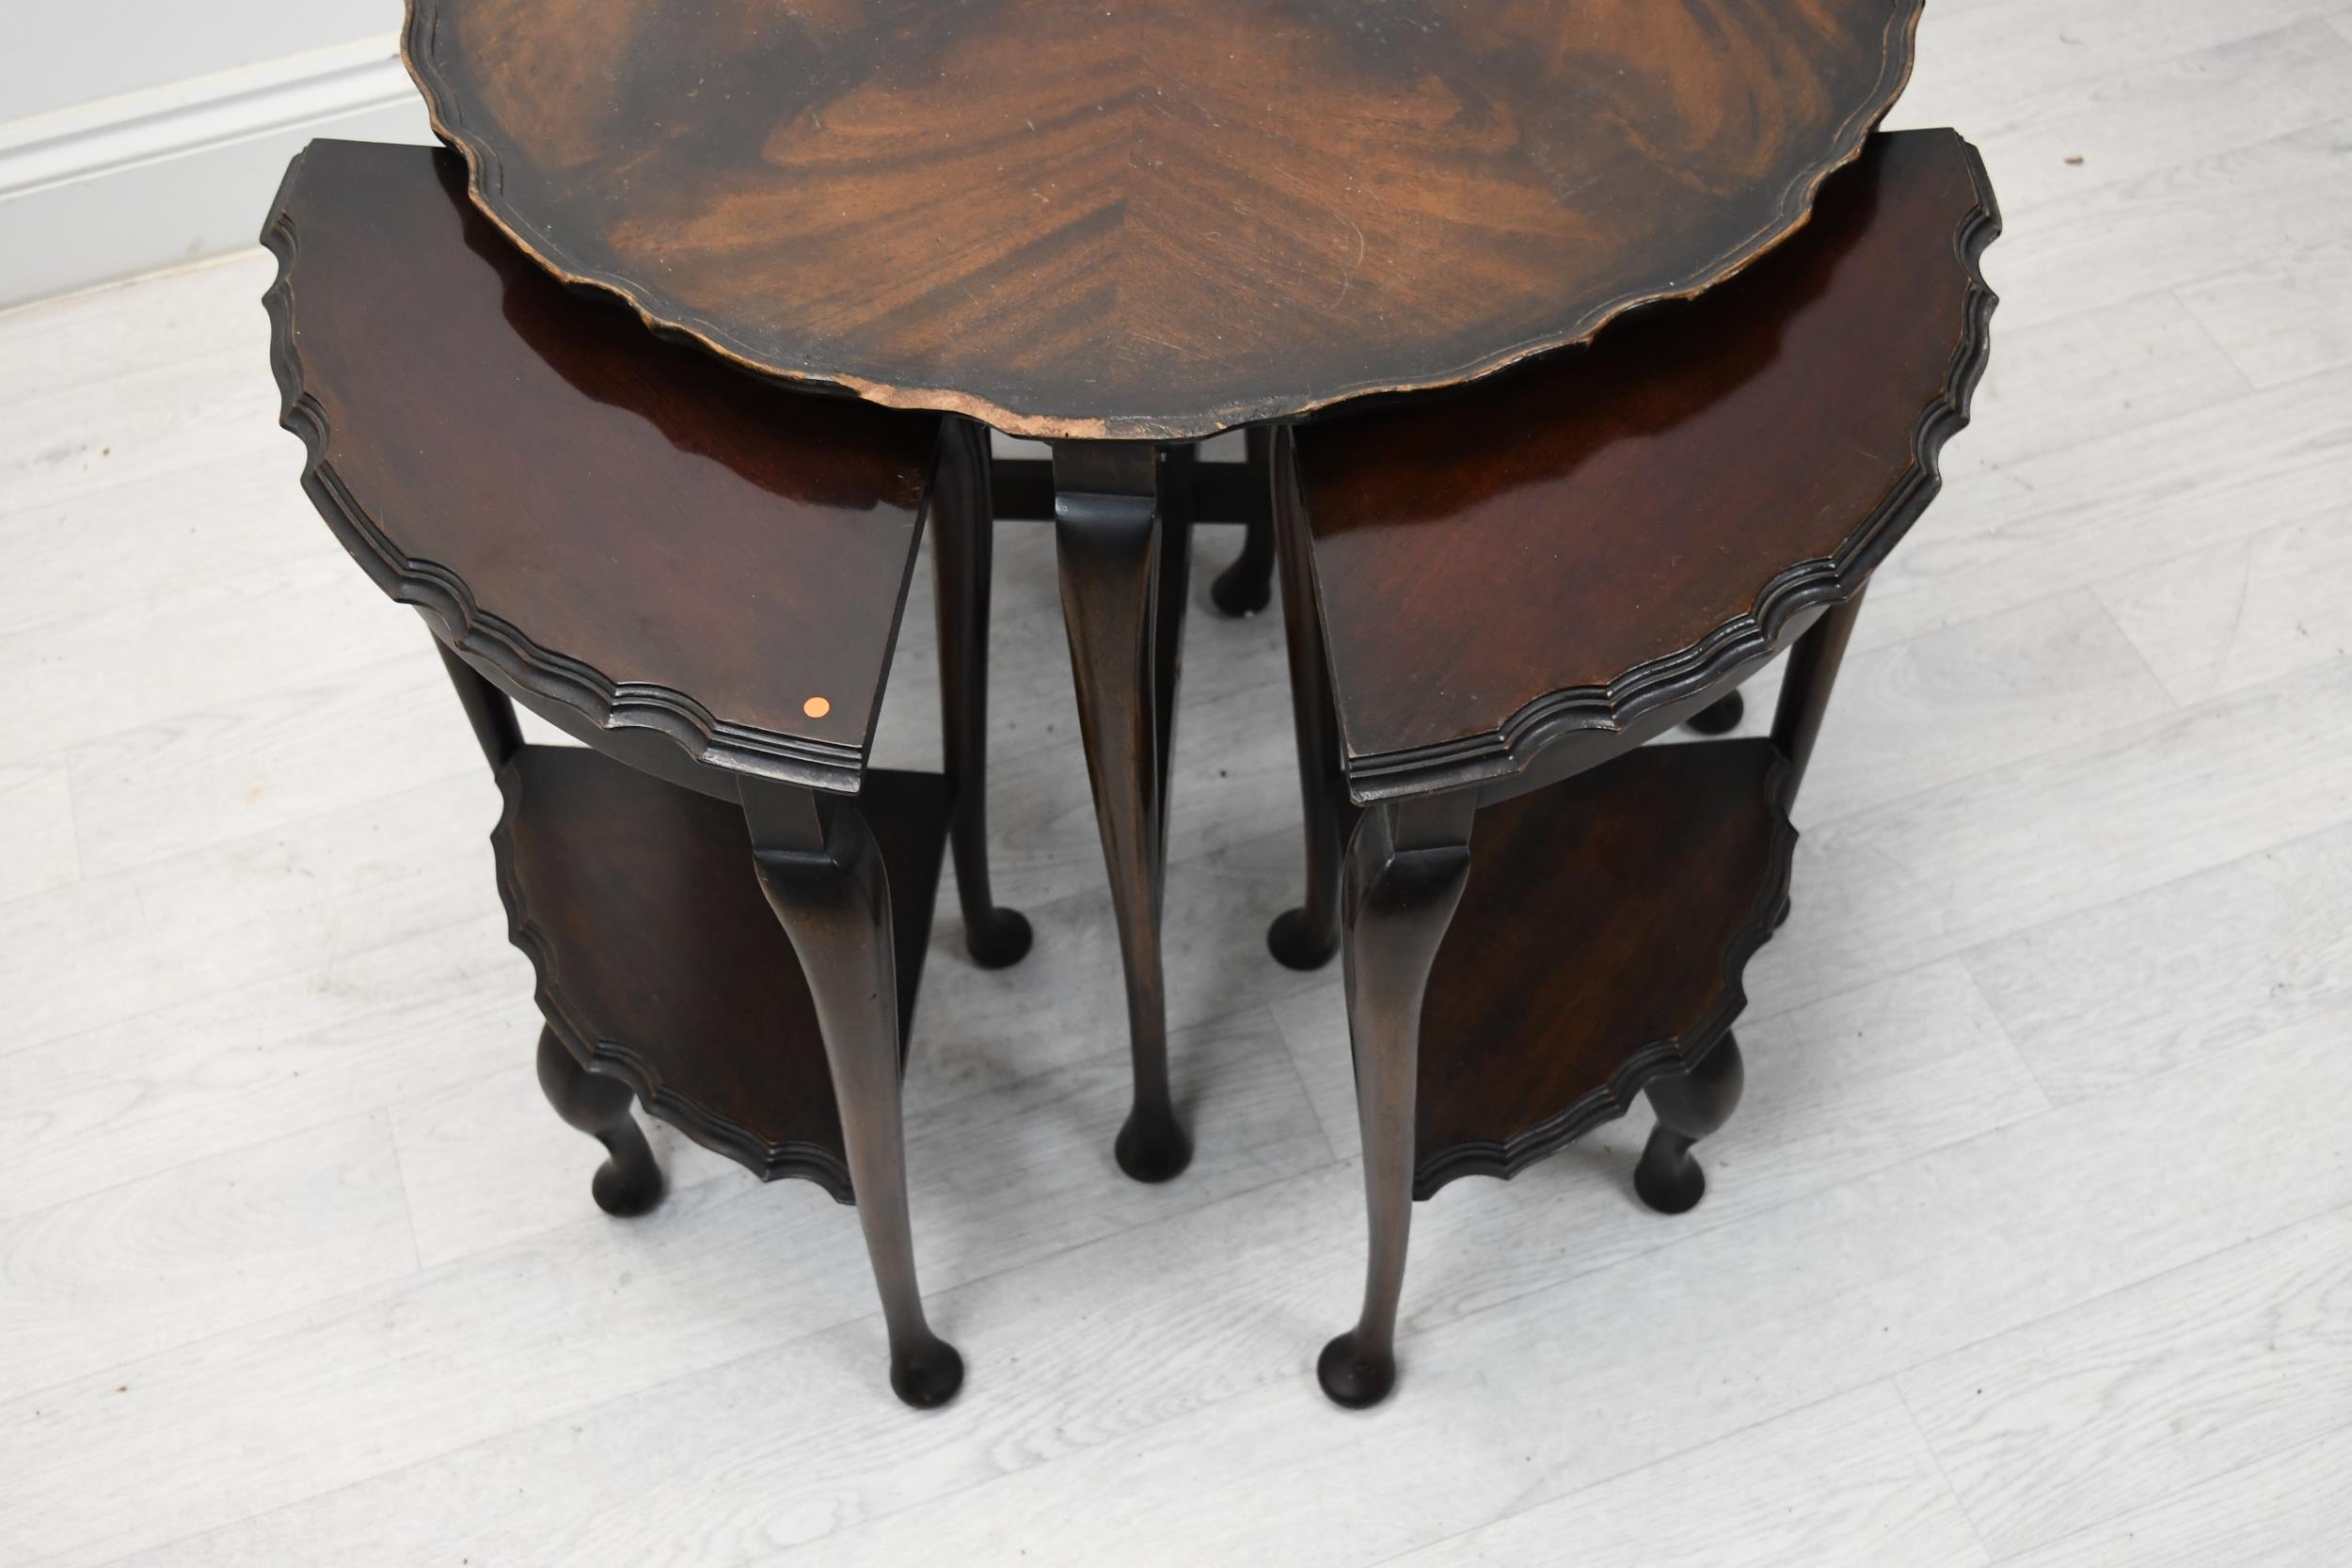 Nest of tables, Georgian style mahogany. H.58, 63cm diameter - Image 3 of 3